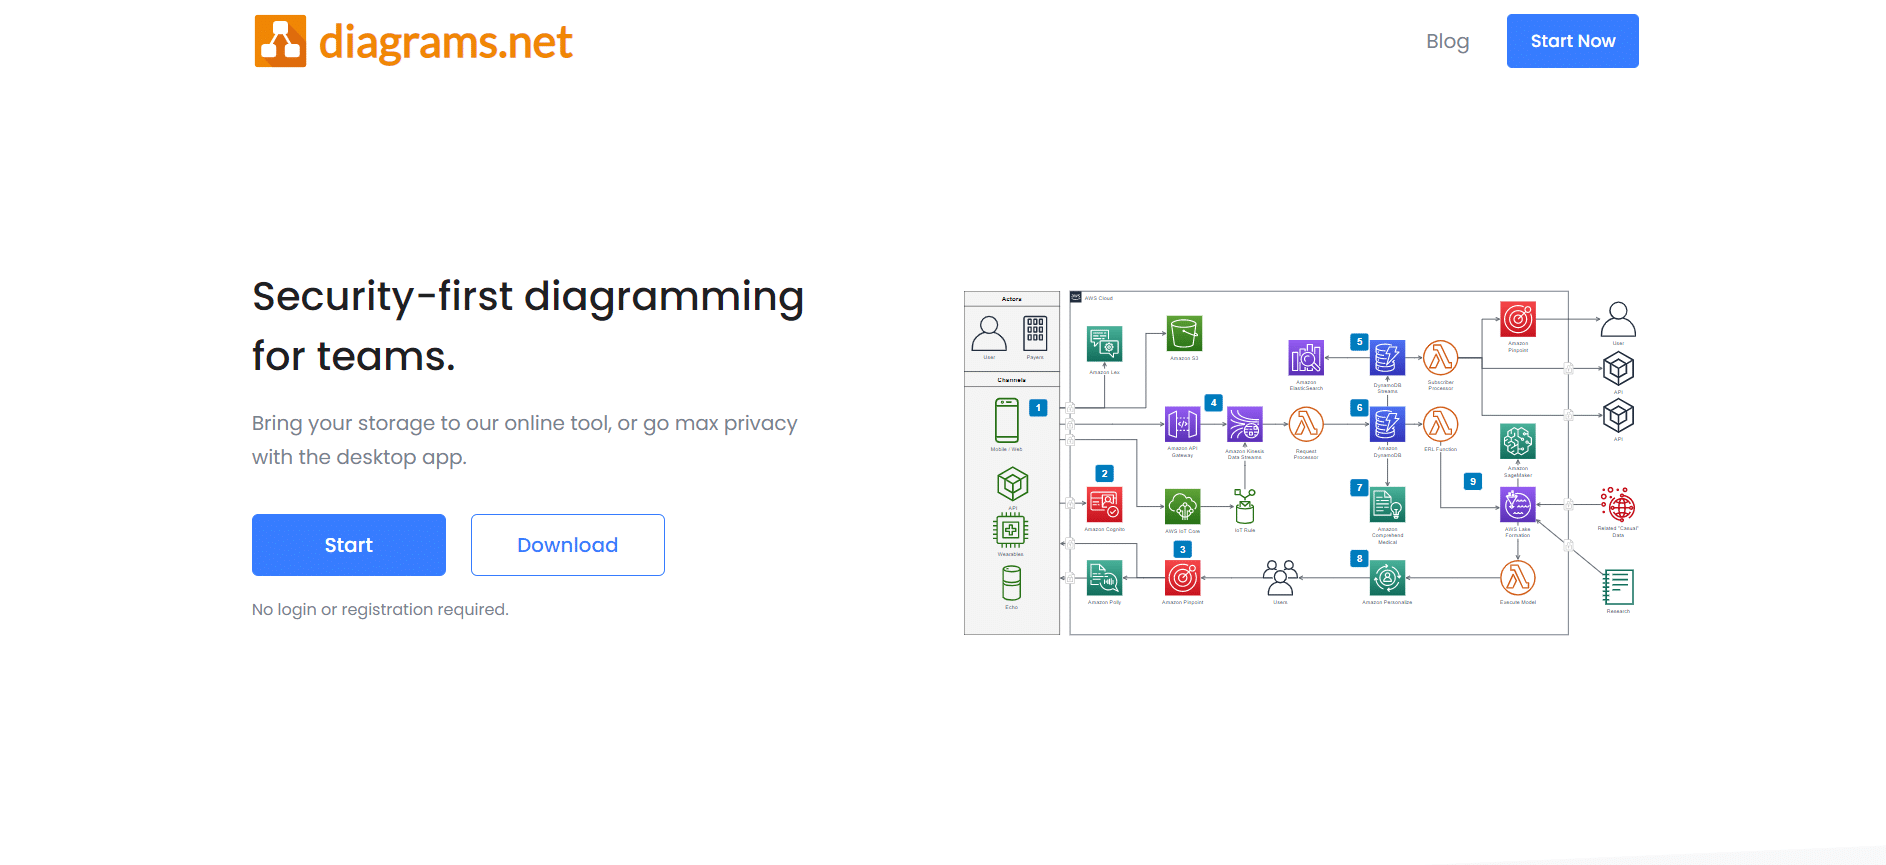 Diagrams.net